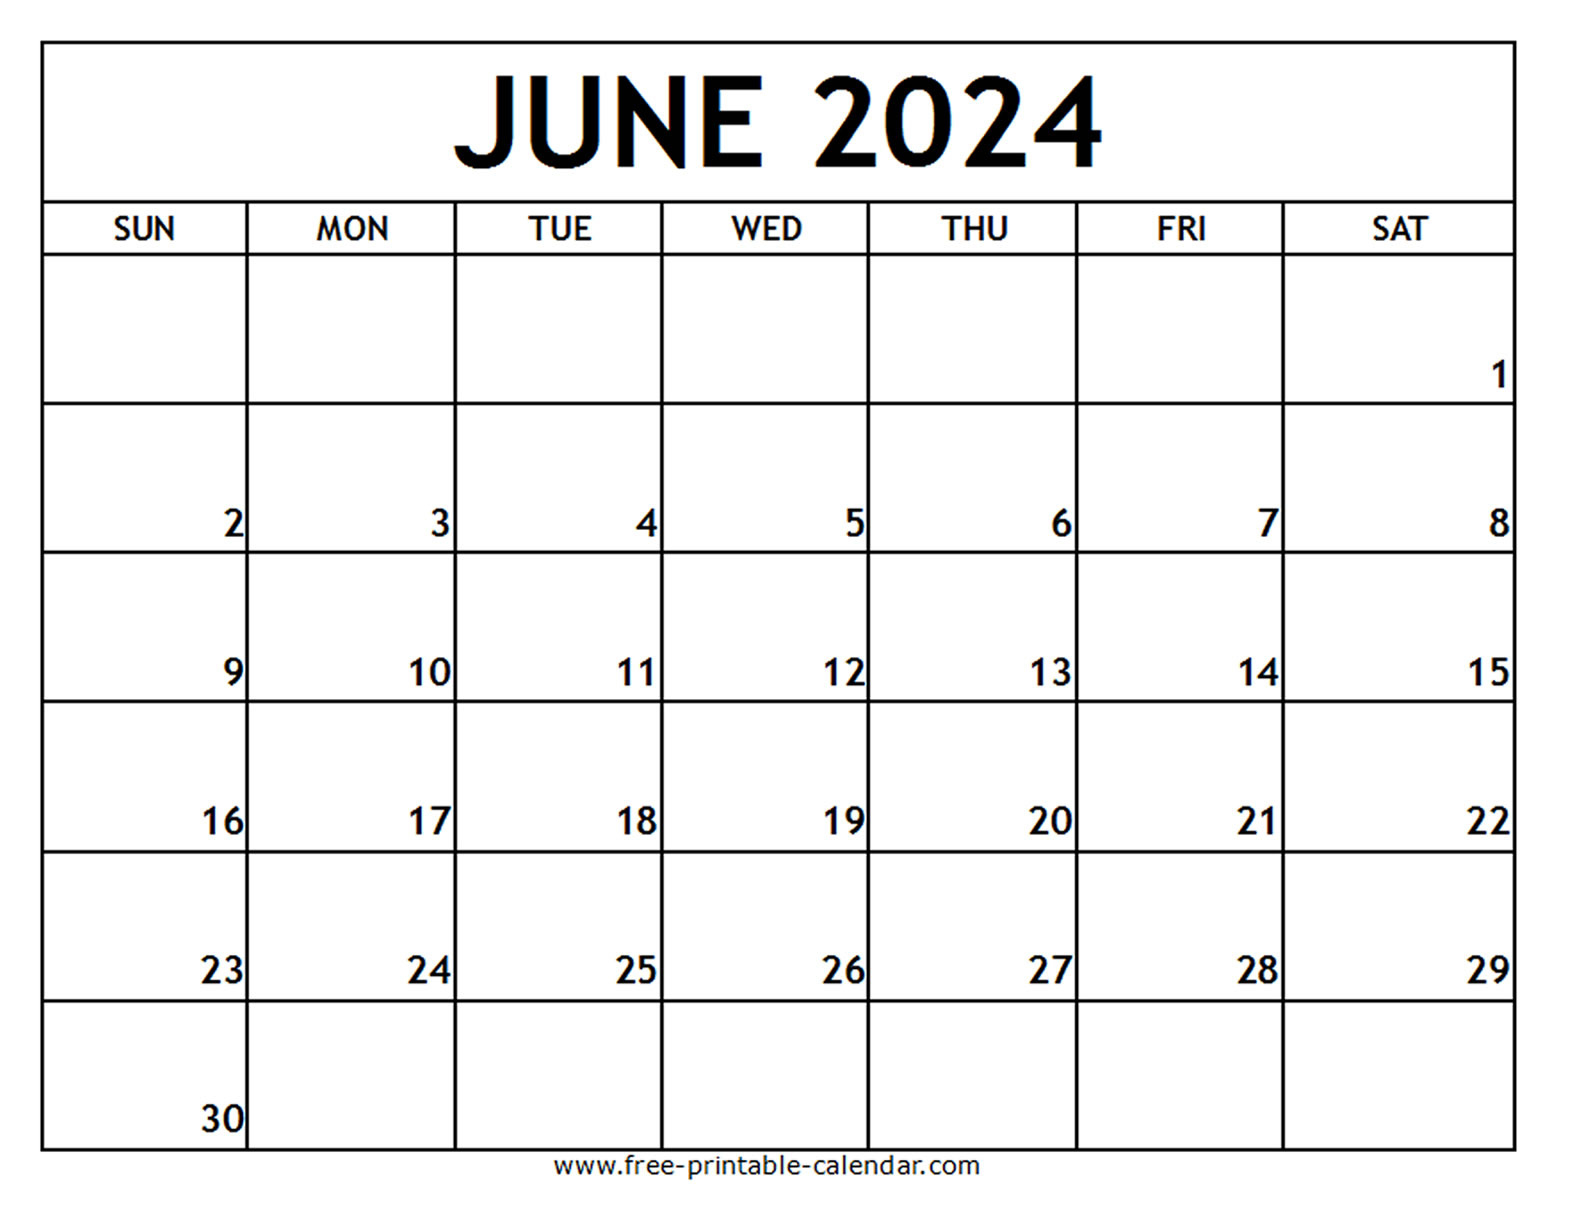 June 2024 Printable Calendar - Free-Printable-Calendar in Free Printable Calendar 2024 June July August